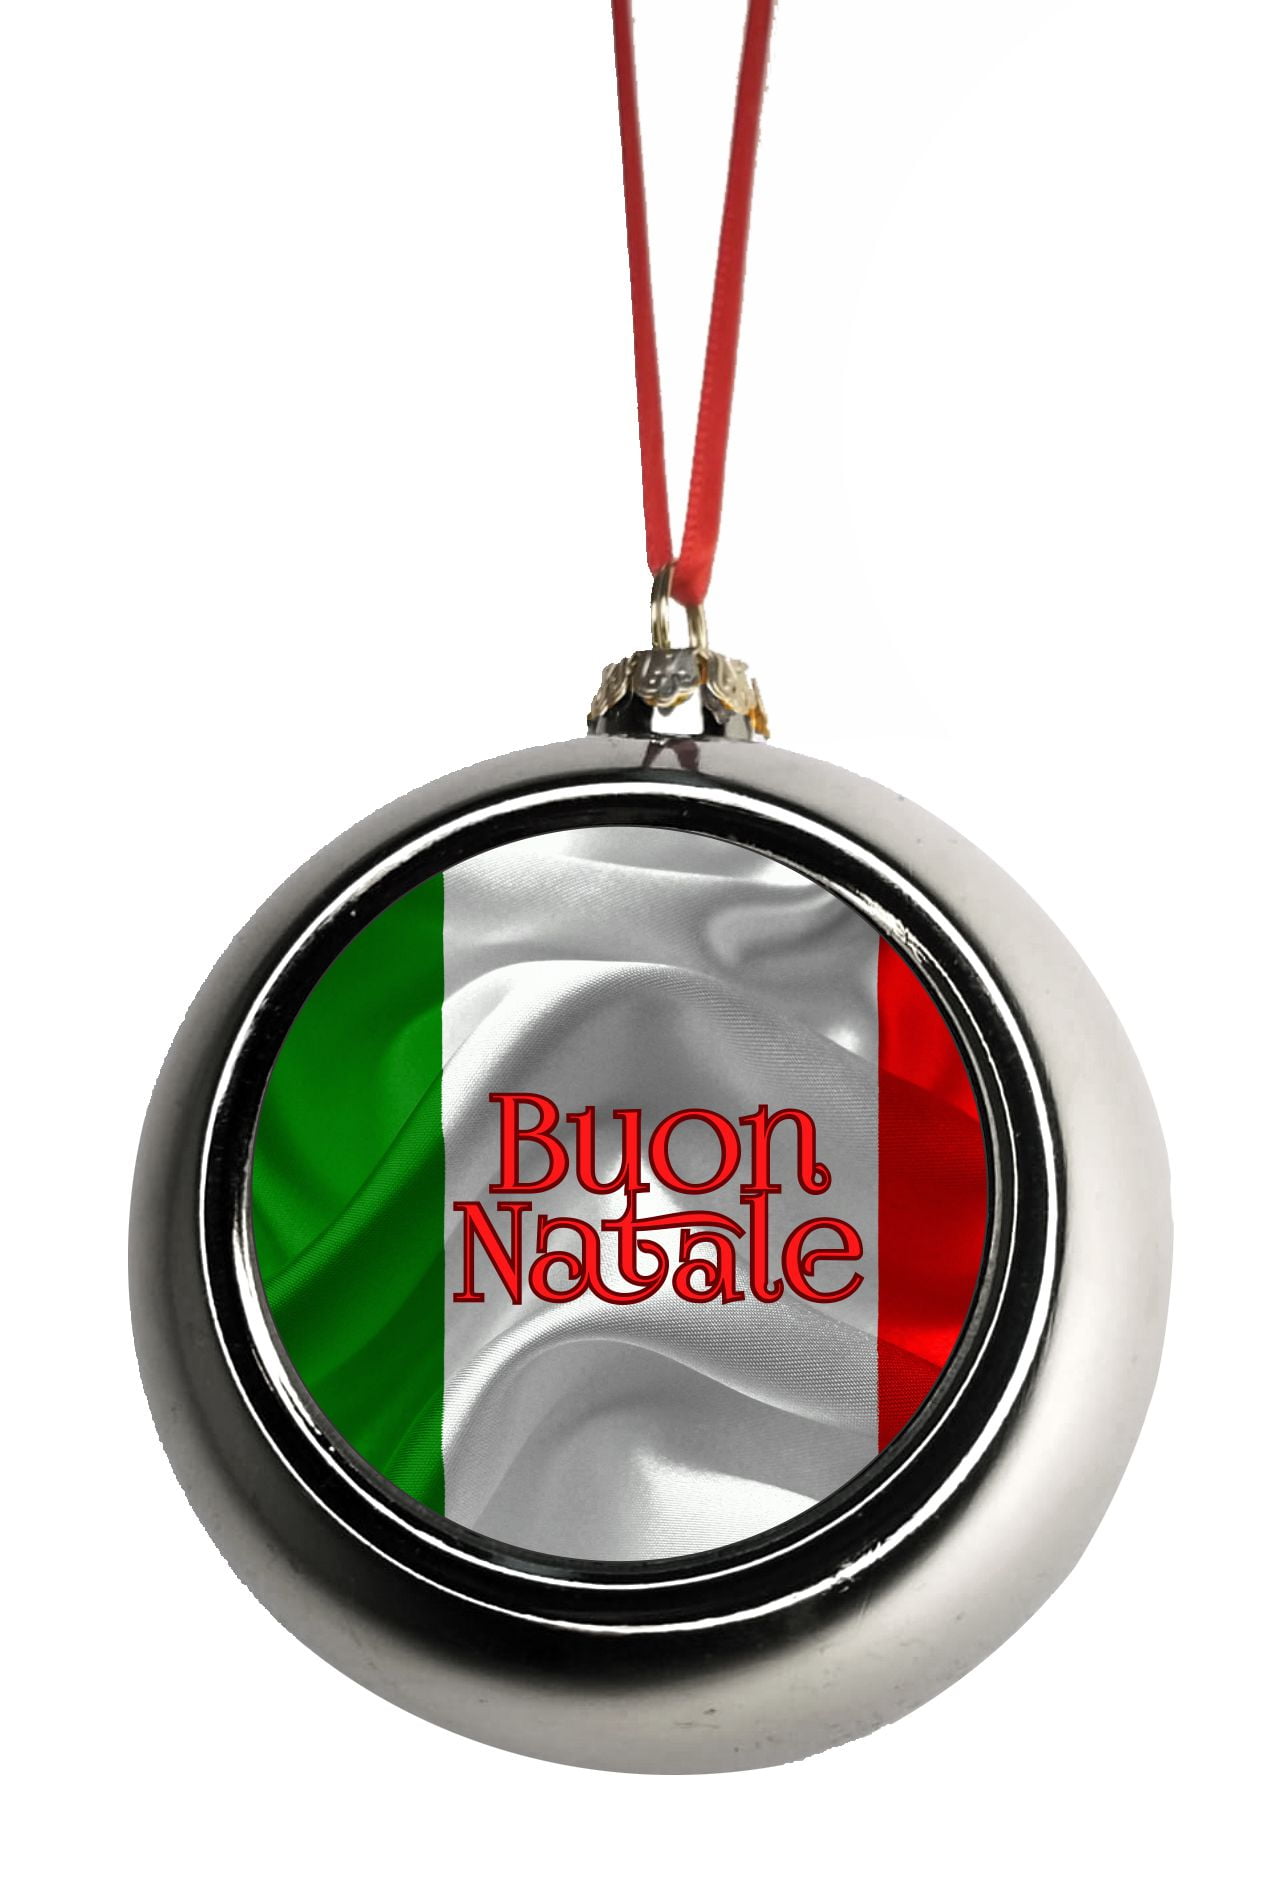 Buon Natale Ornament.Flag Italy Buon Natale Ornaments Silver Bauble Christmas Ornament Balls Walmart Com Walmart Com